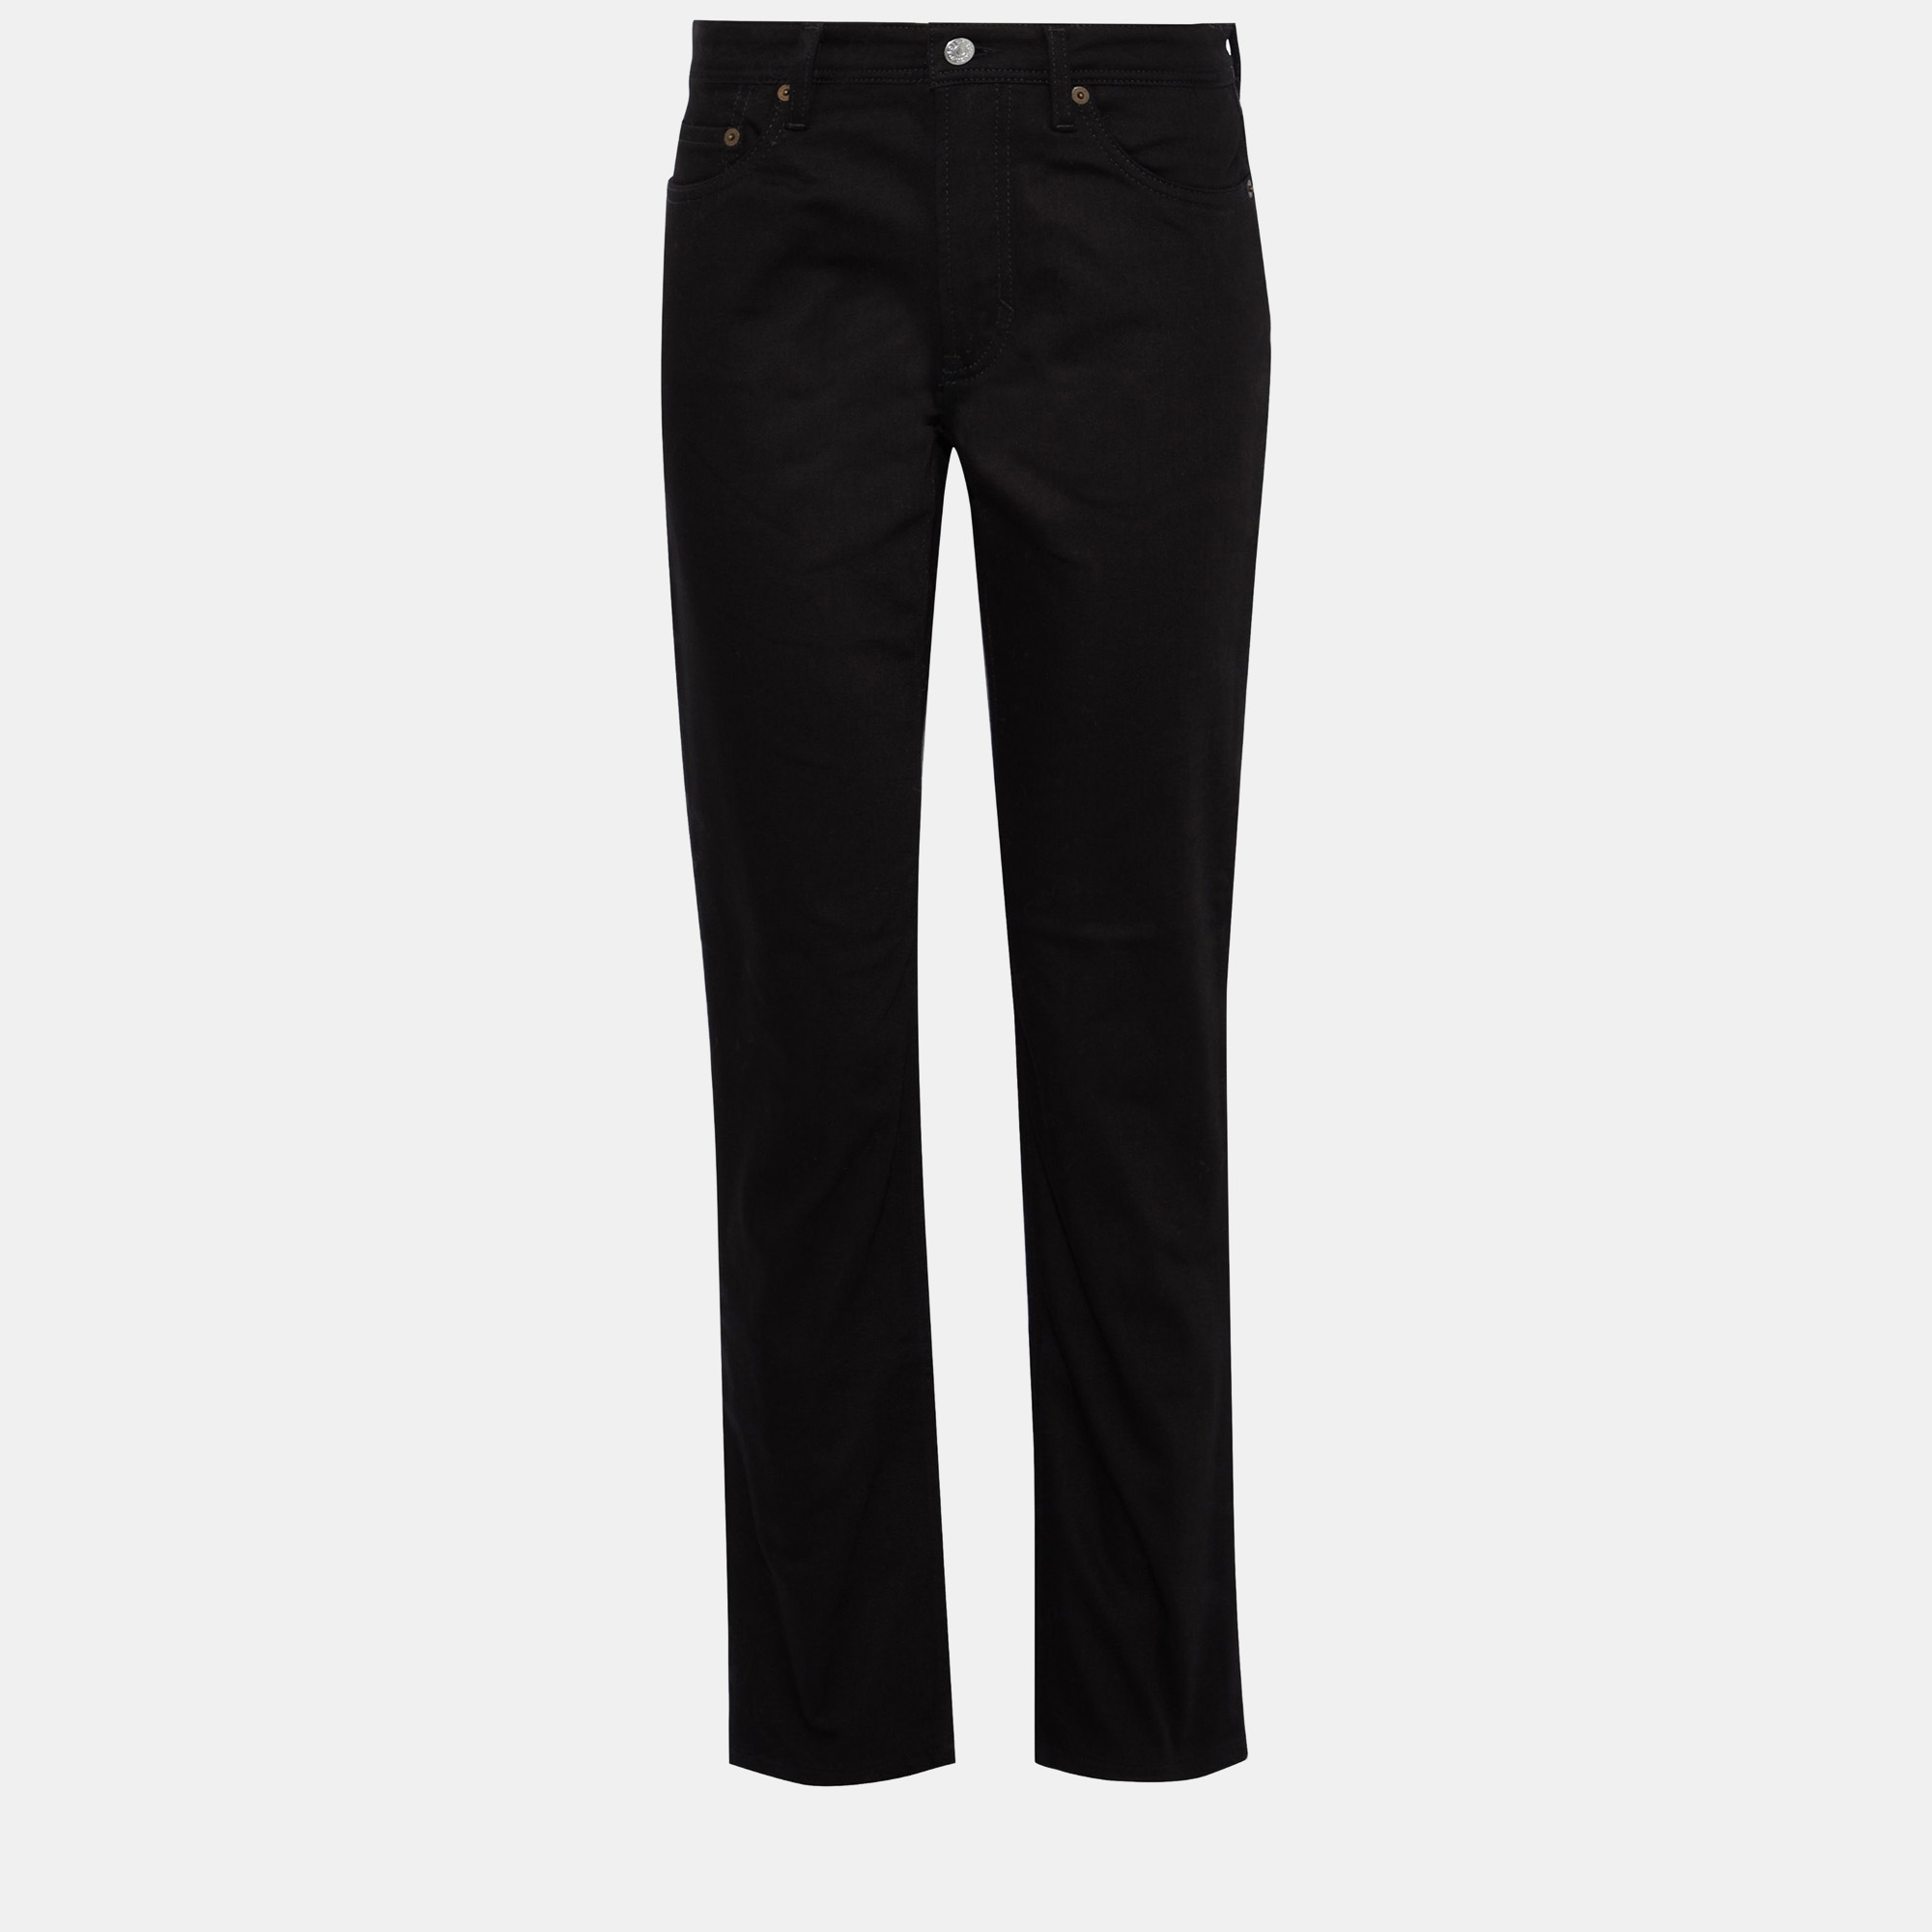 Acne studios cotton straight leg jeans 29w-32l